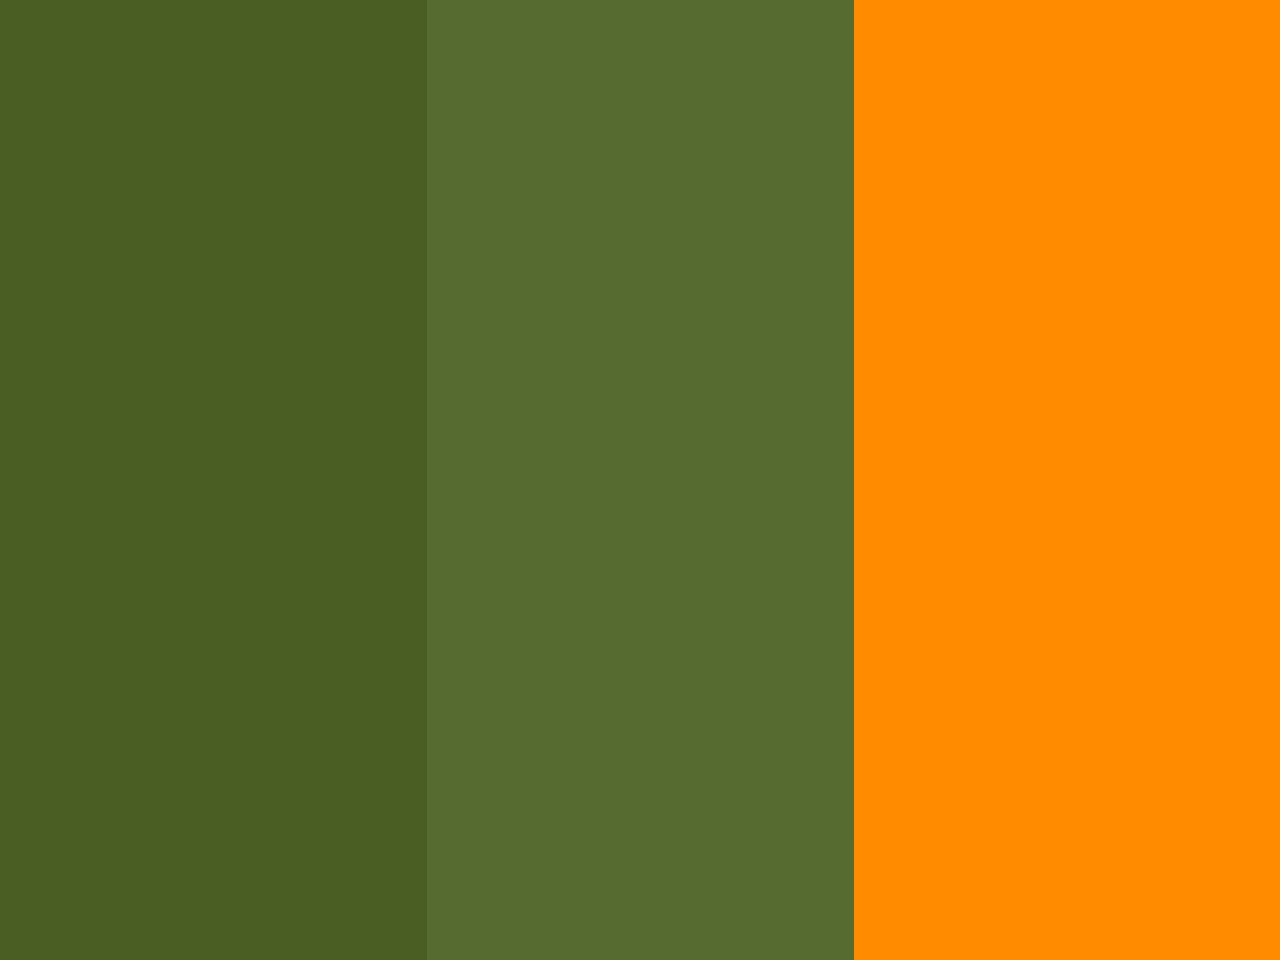 Dark Moss Green Olive And Orange Three Color